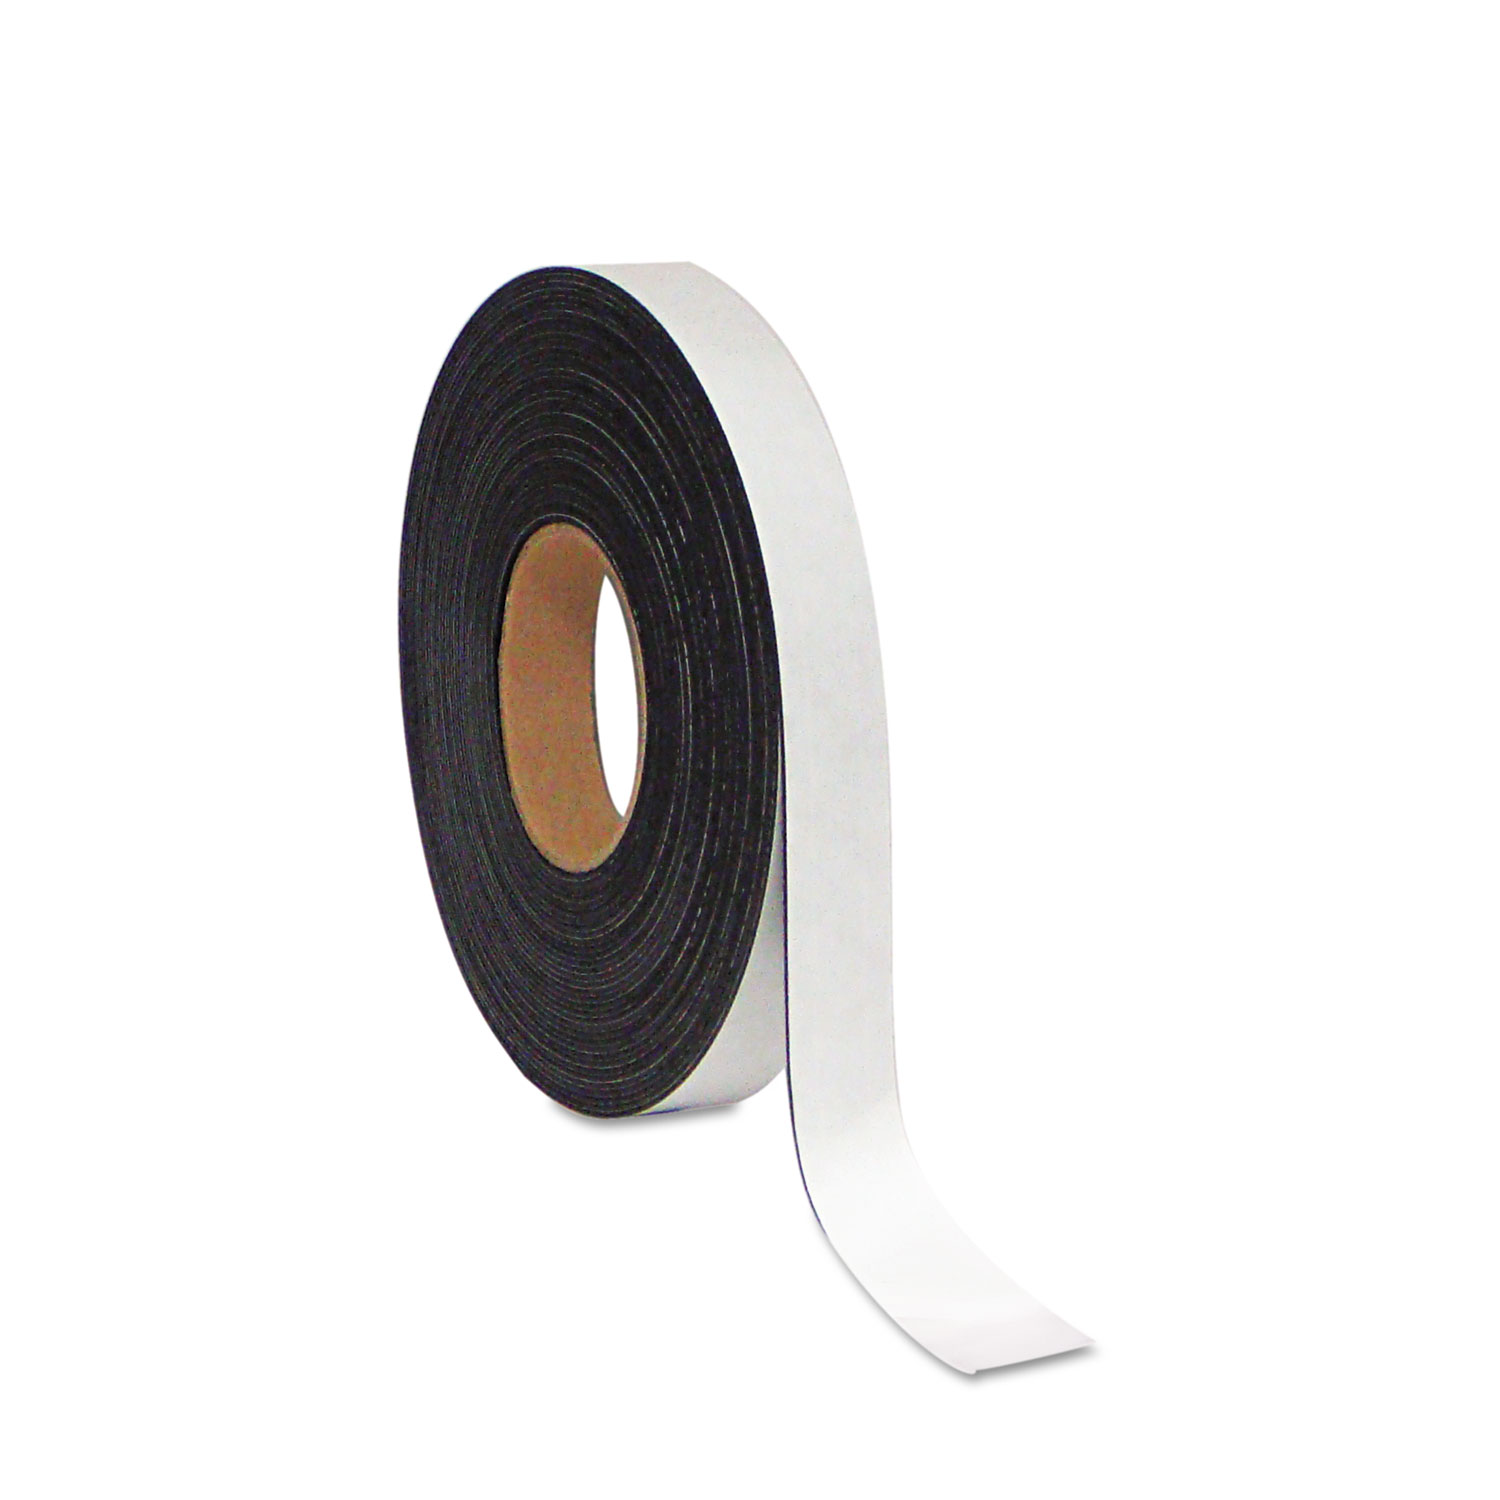  MasterVision FM2018 Dry Erase Magnetic Tape Roll, White, 1 x 50 Ft. (BVCFM2018) 